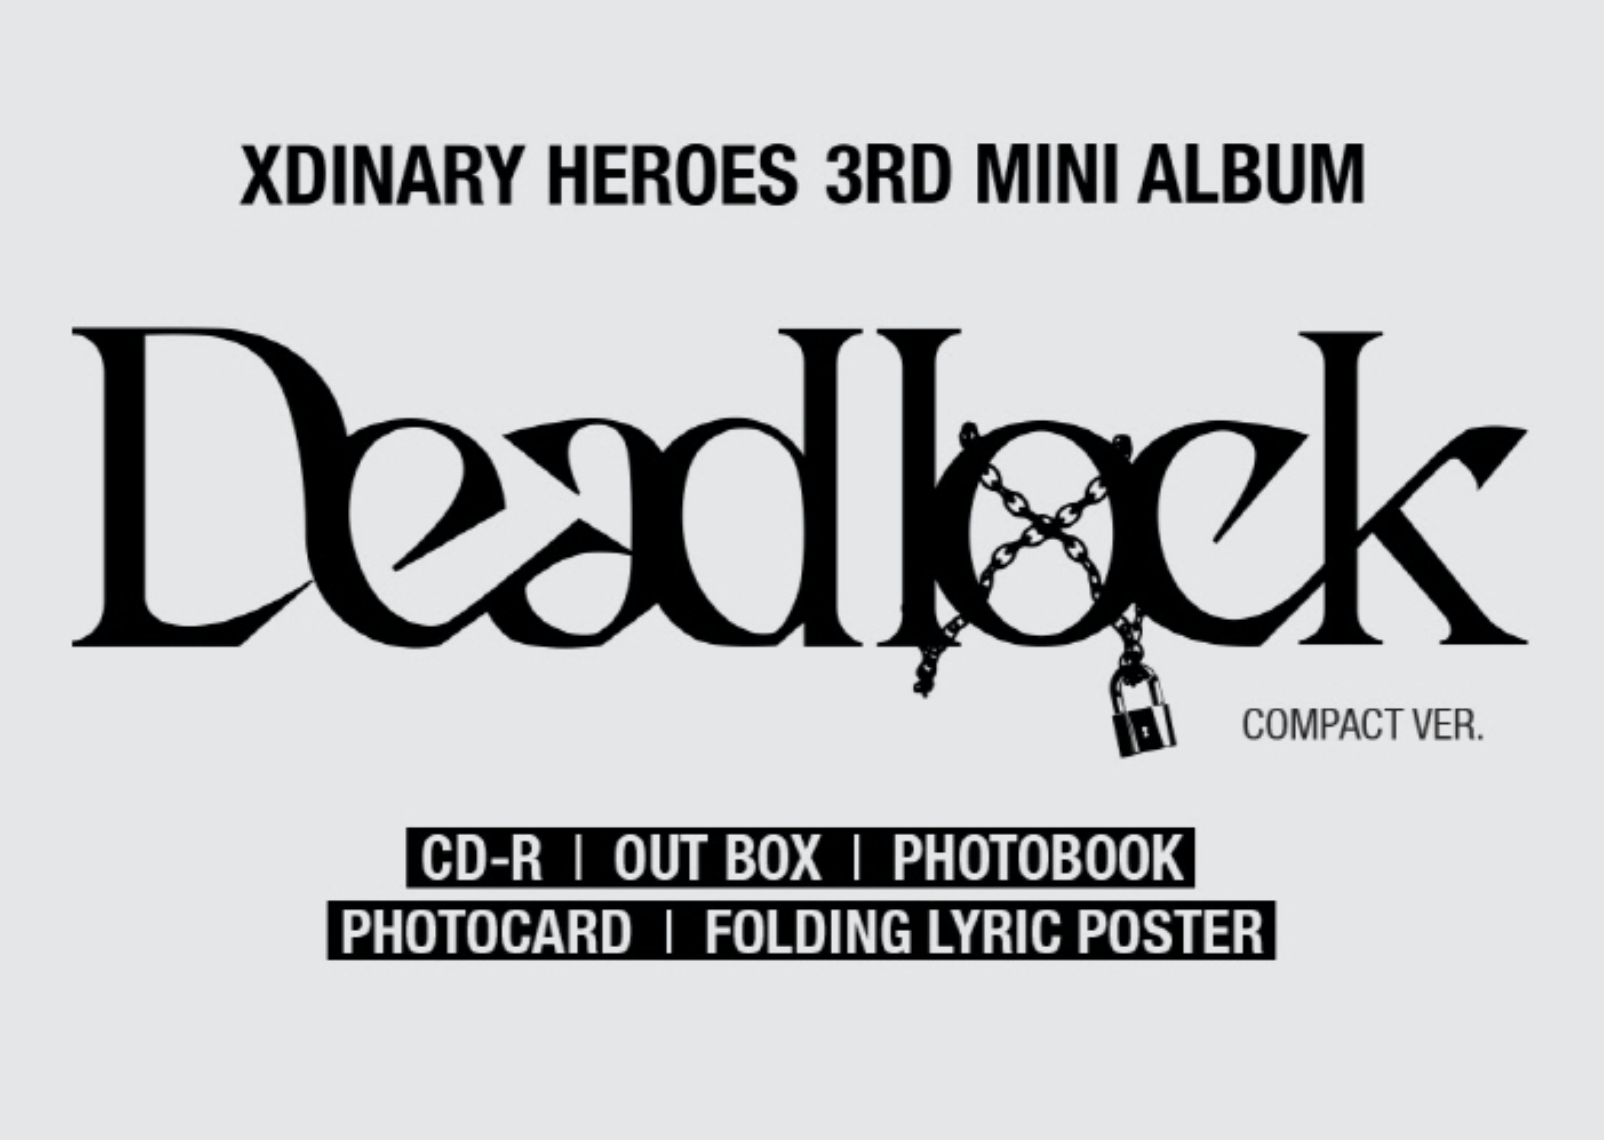 Xdinary Heroes 3rd Mini Albm: Deadlock [Compact Ver.]